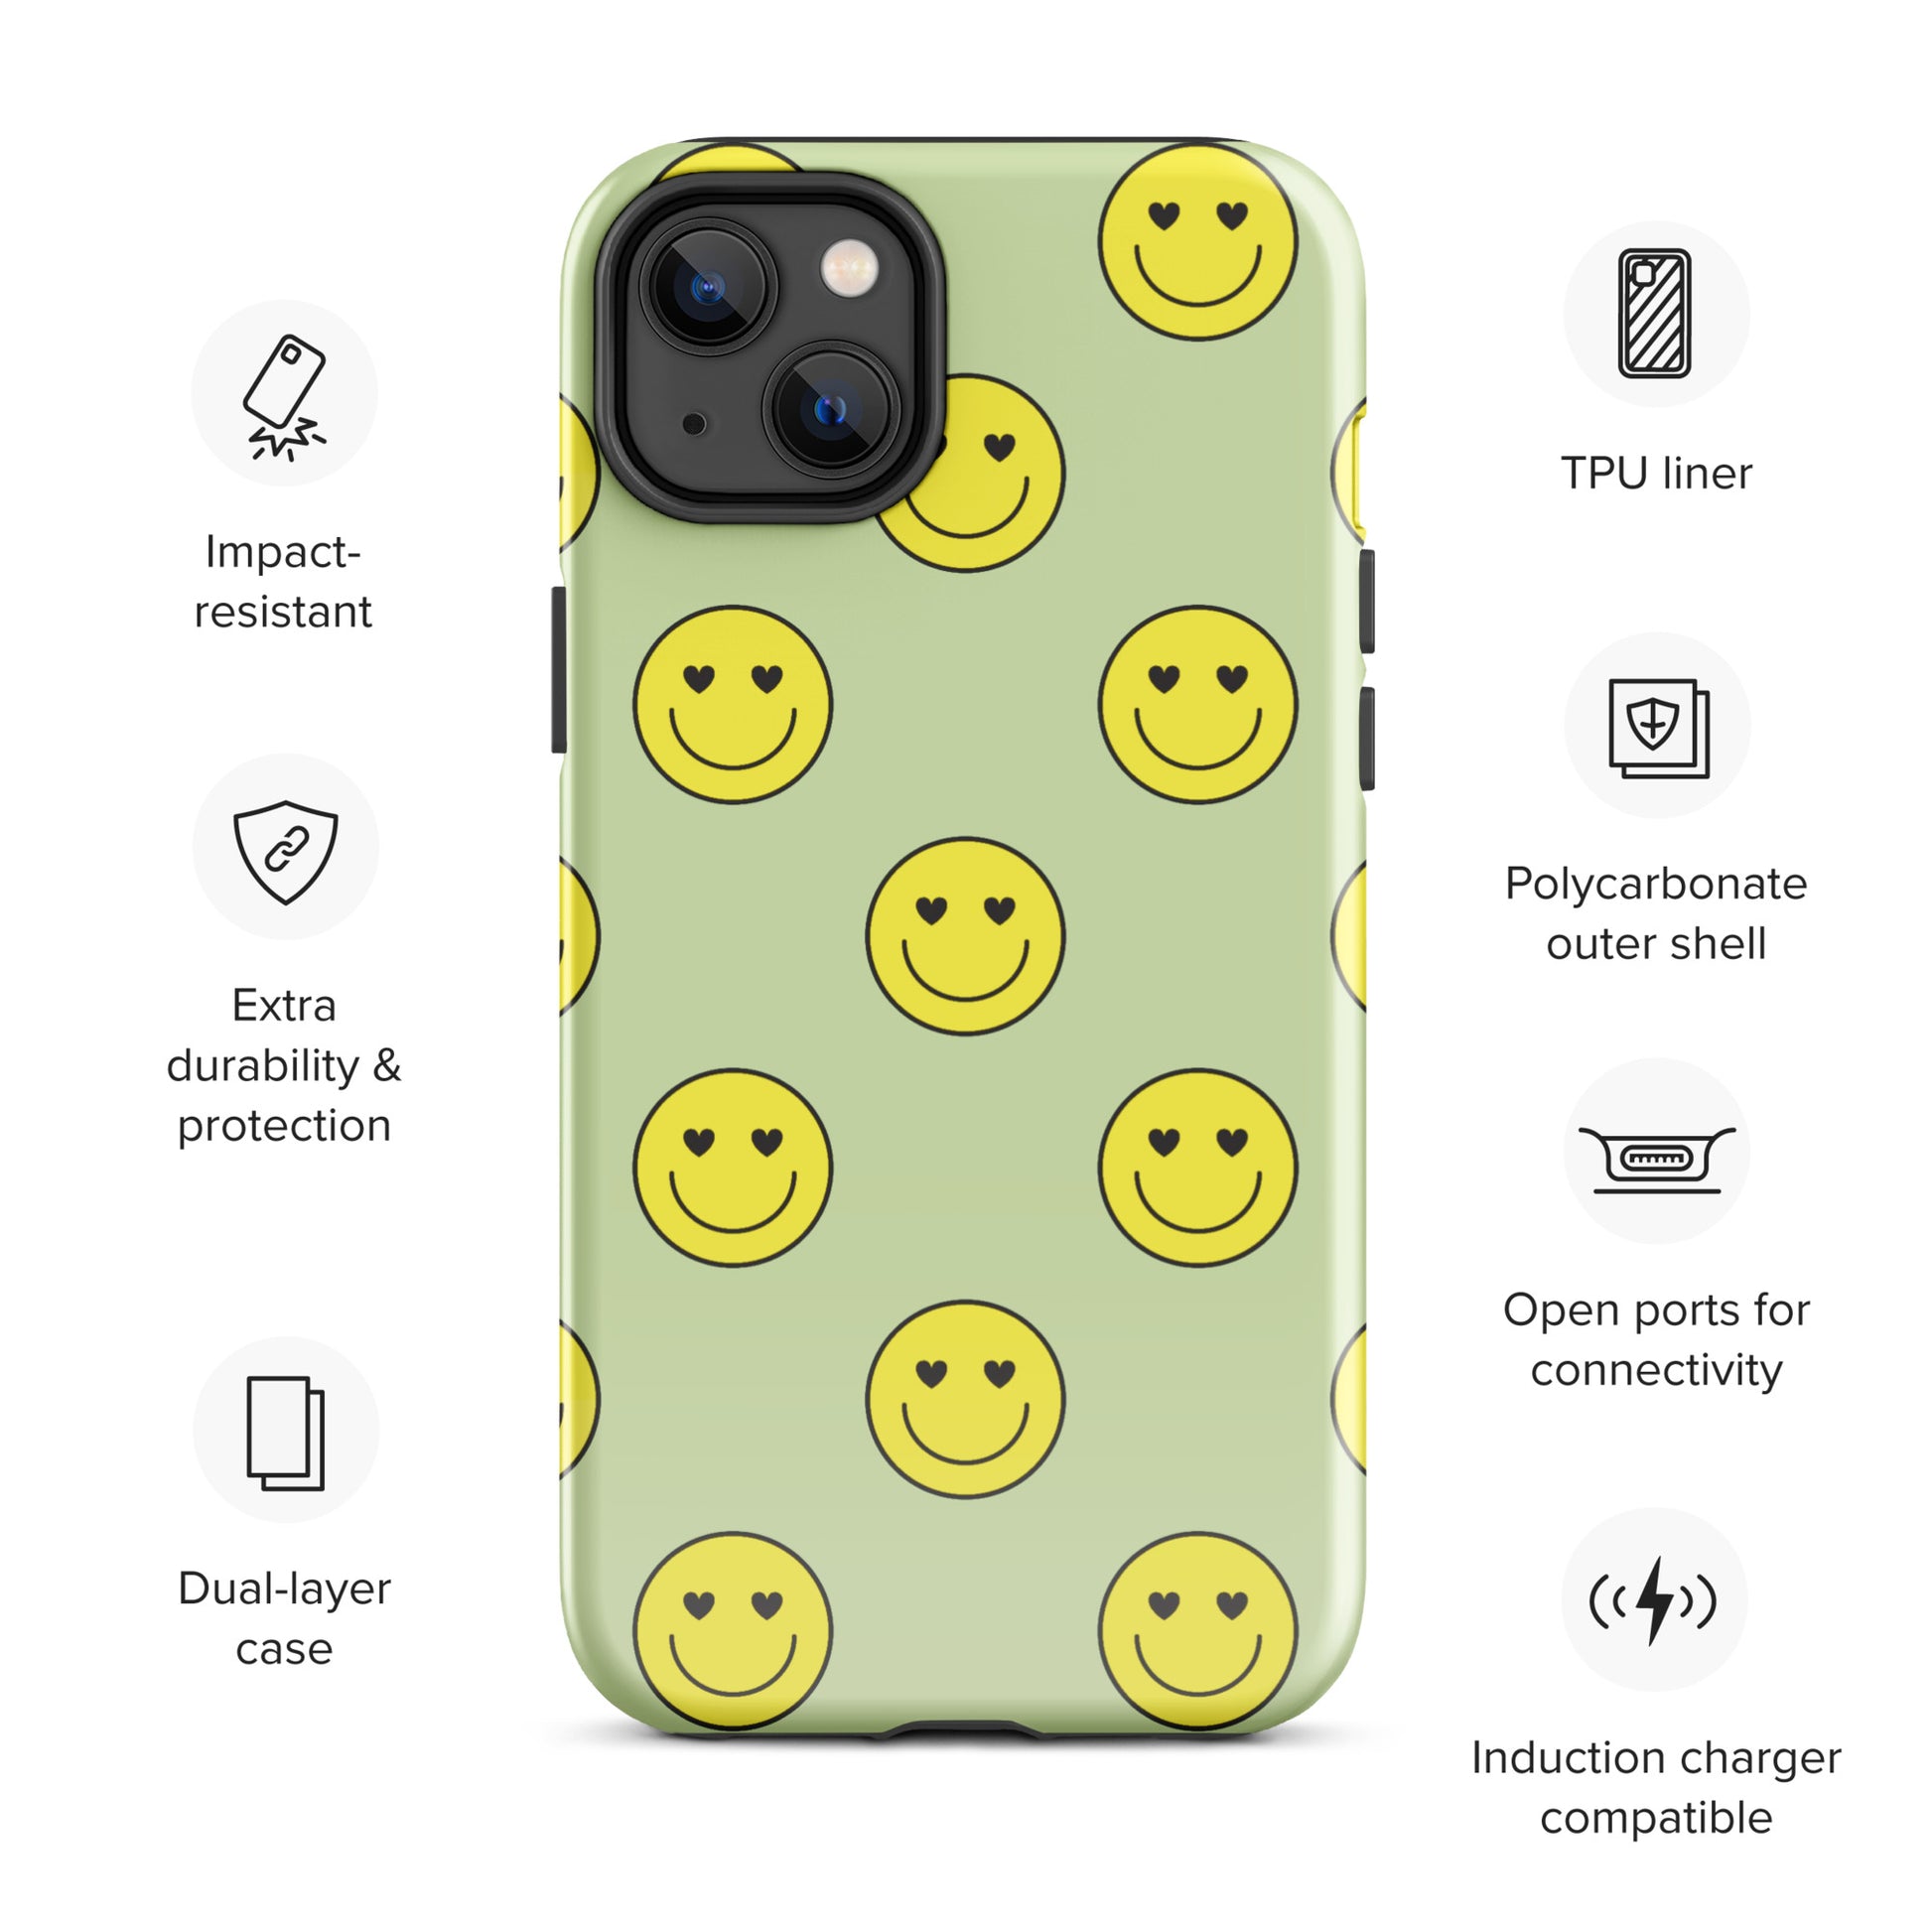 Neon Smiley Faces iPhone Case